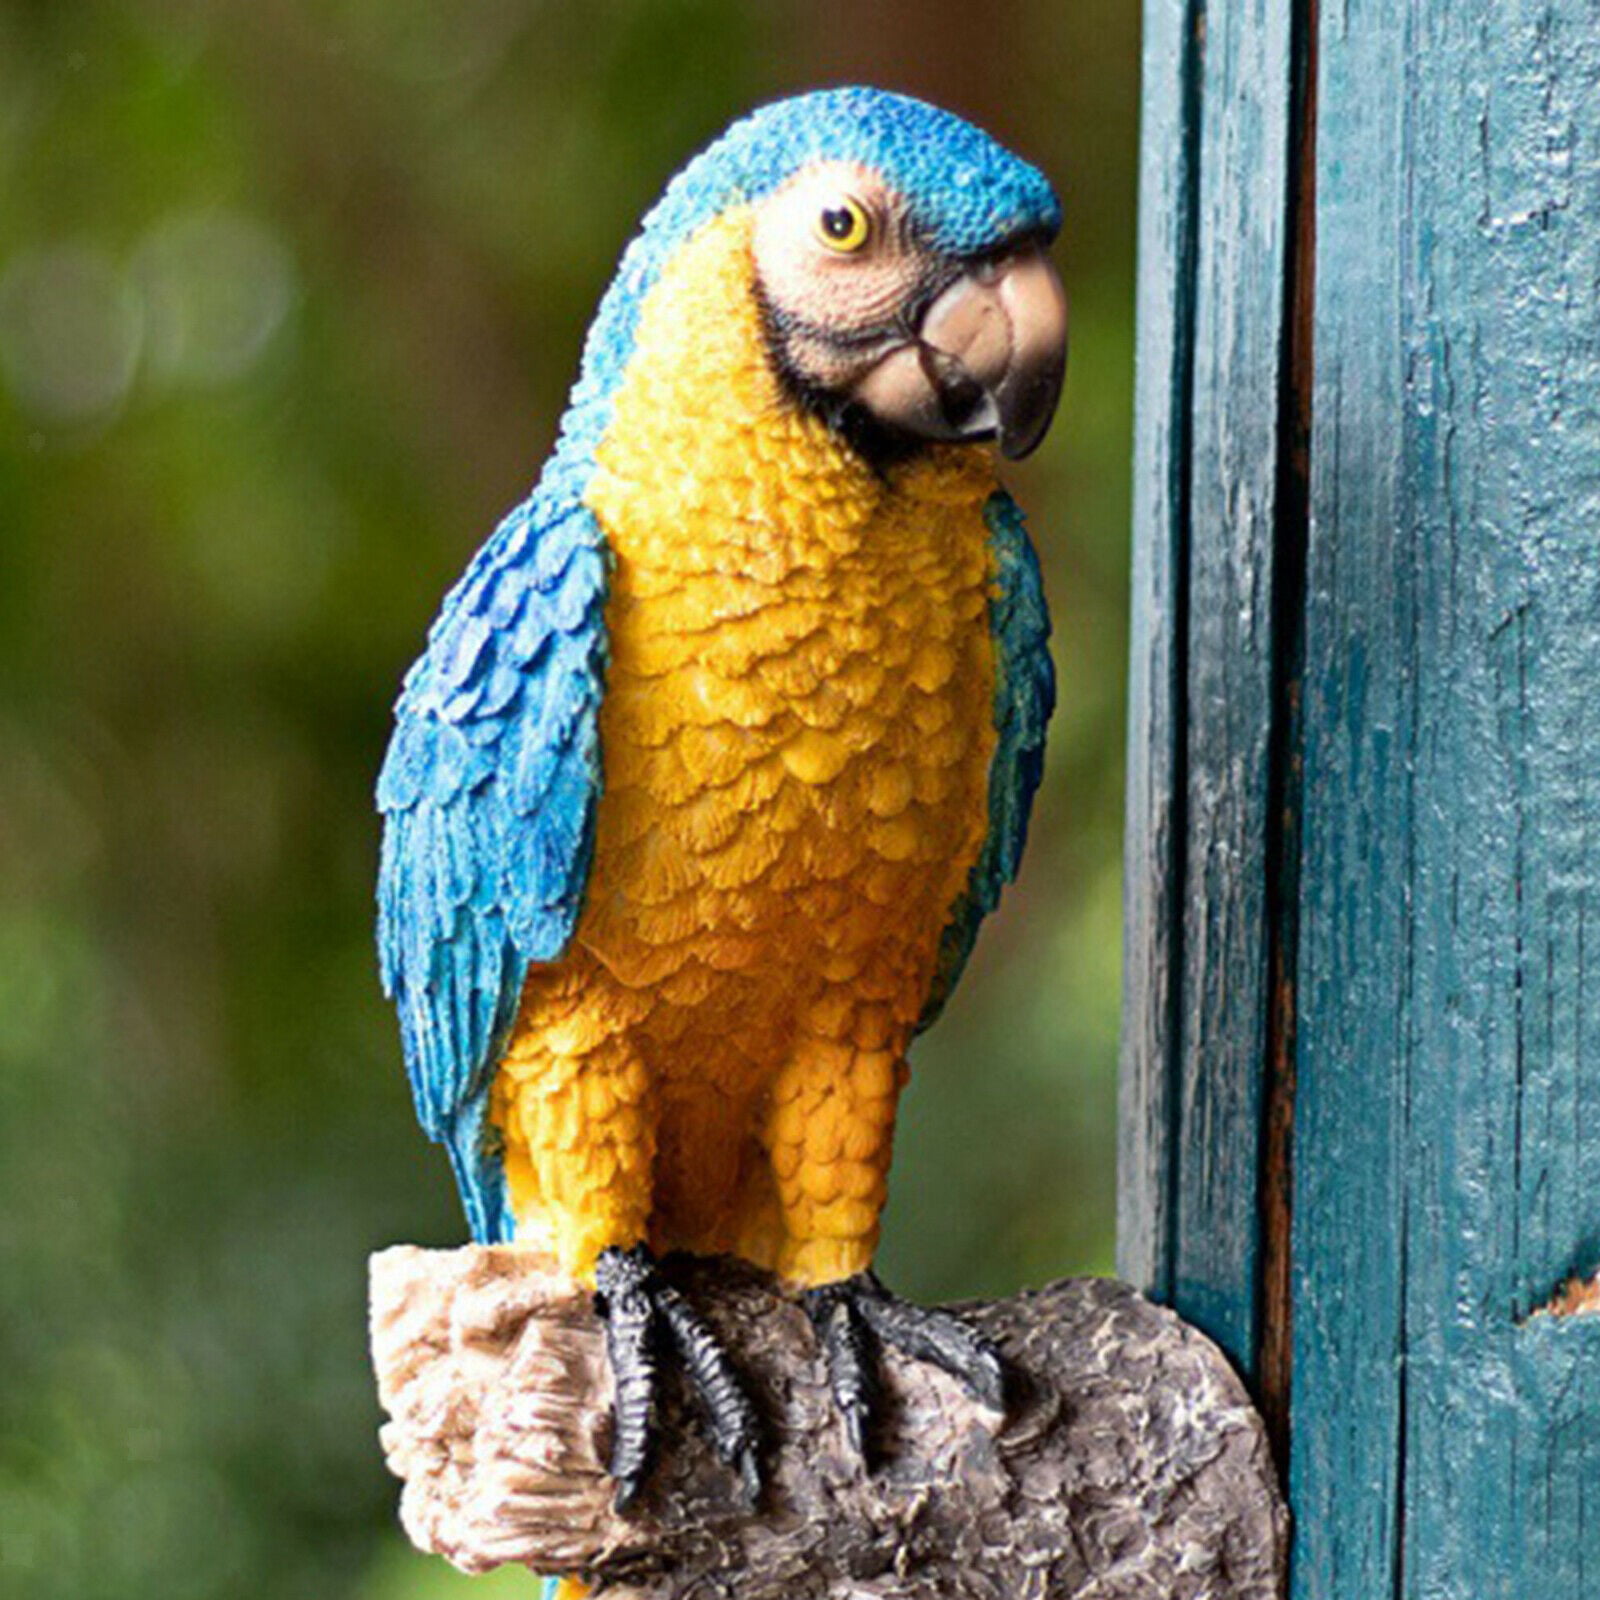 Resin Garden Parrot Statue Vivid Lifelike Outdoor Yard Macaws Decor Ornament